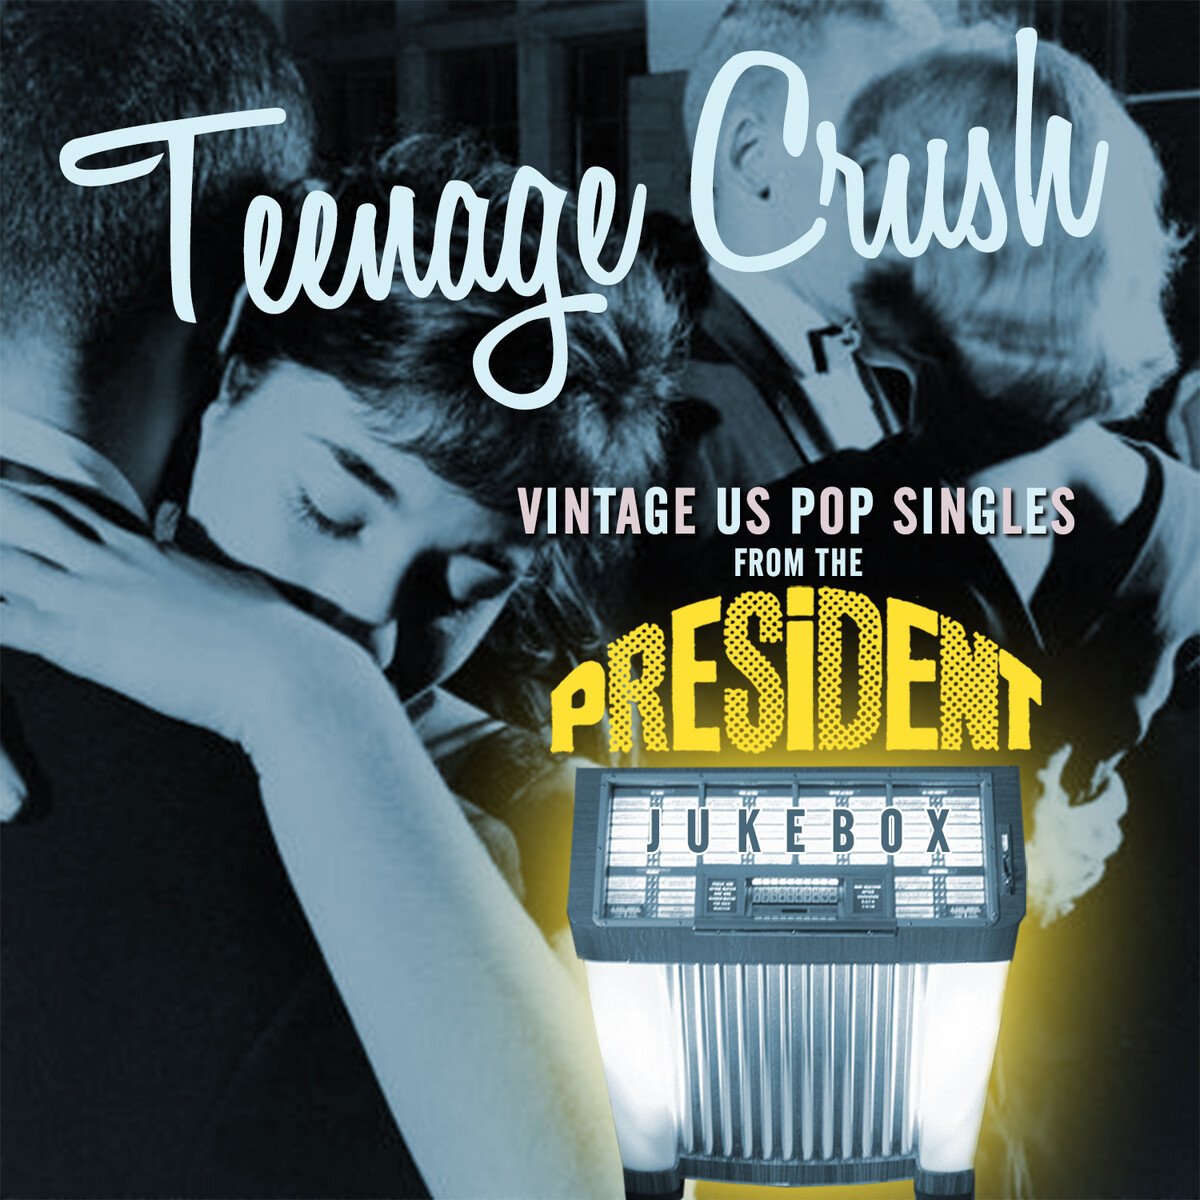 Repost: Teenage Crush - Vintage Us Pop Singles from the President Jukebox (Fixed)